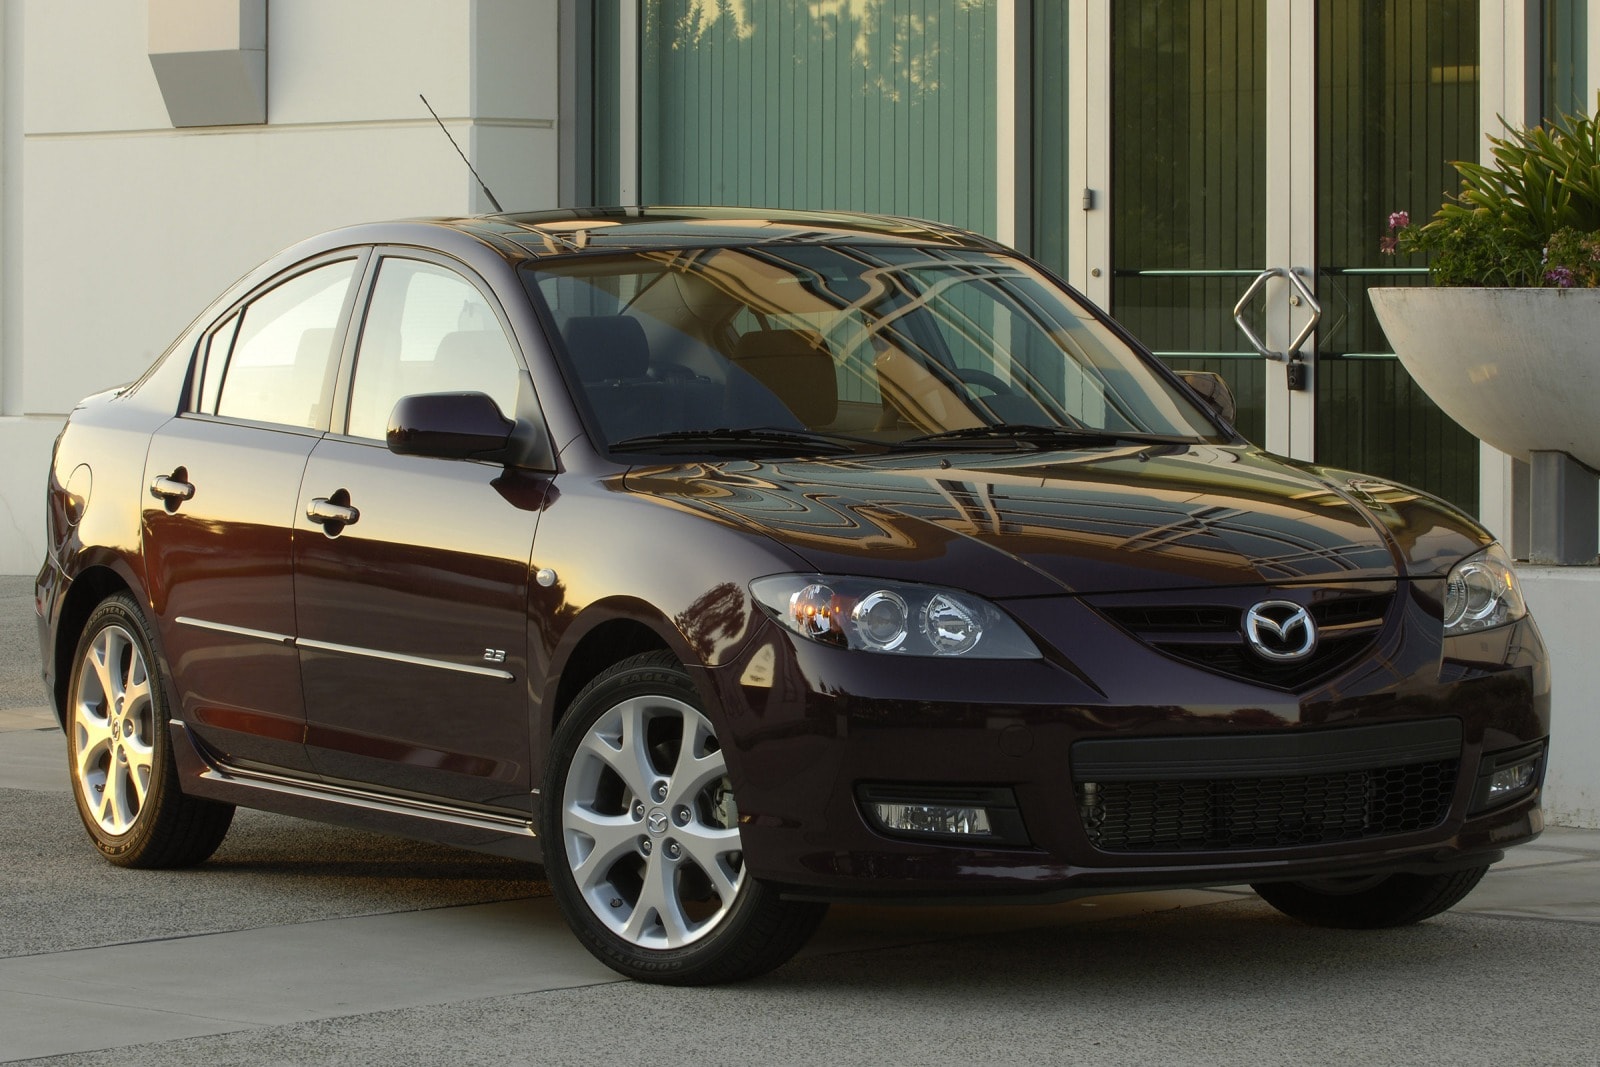 2009 Mazda 3 Review & Ratings | Edmunds